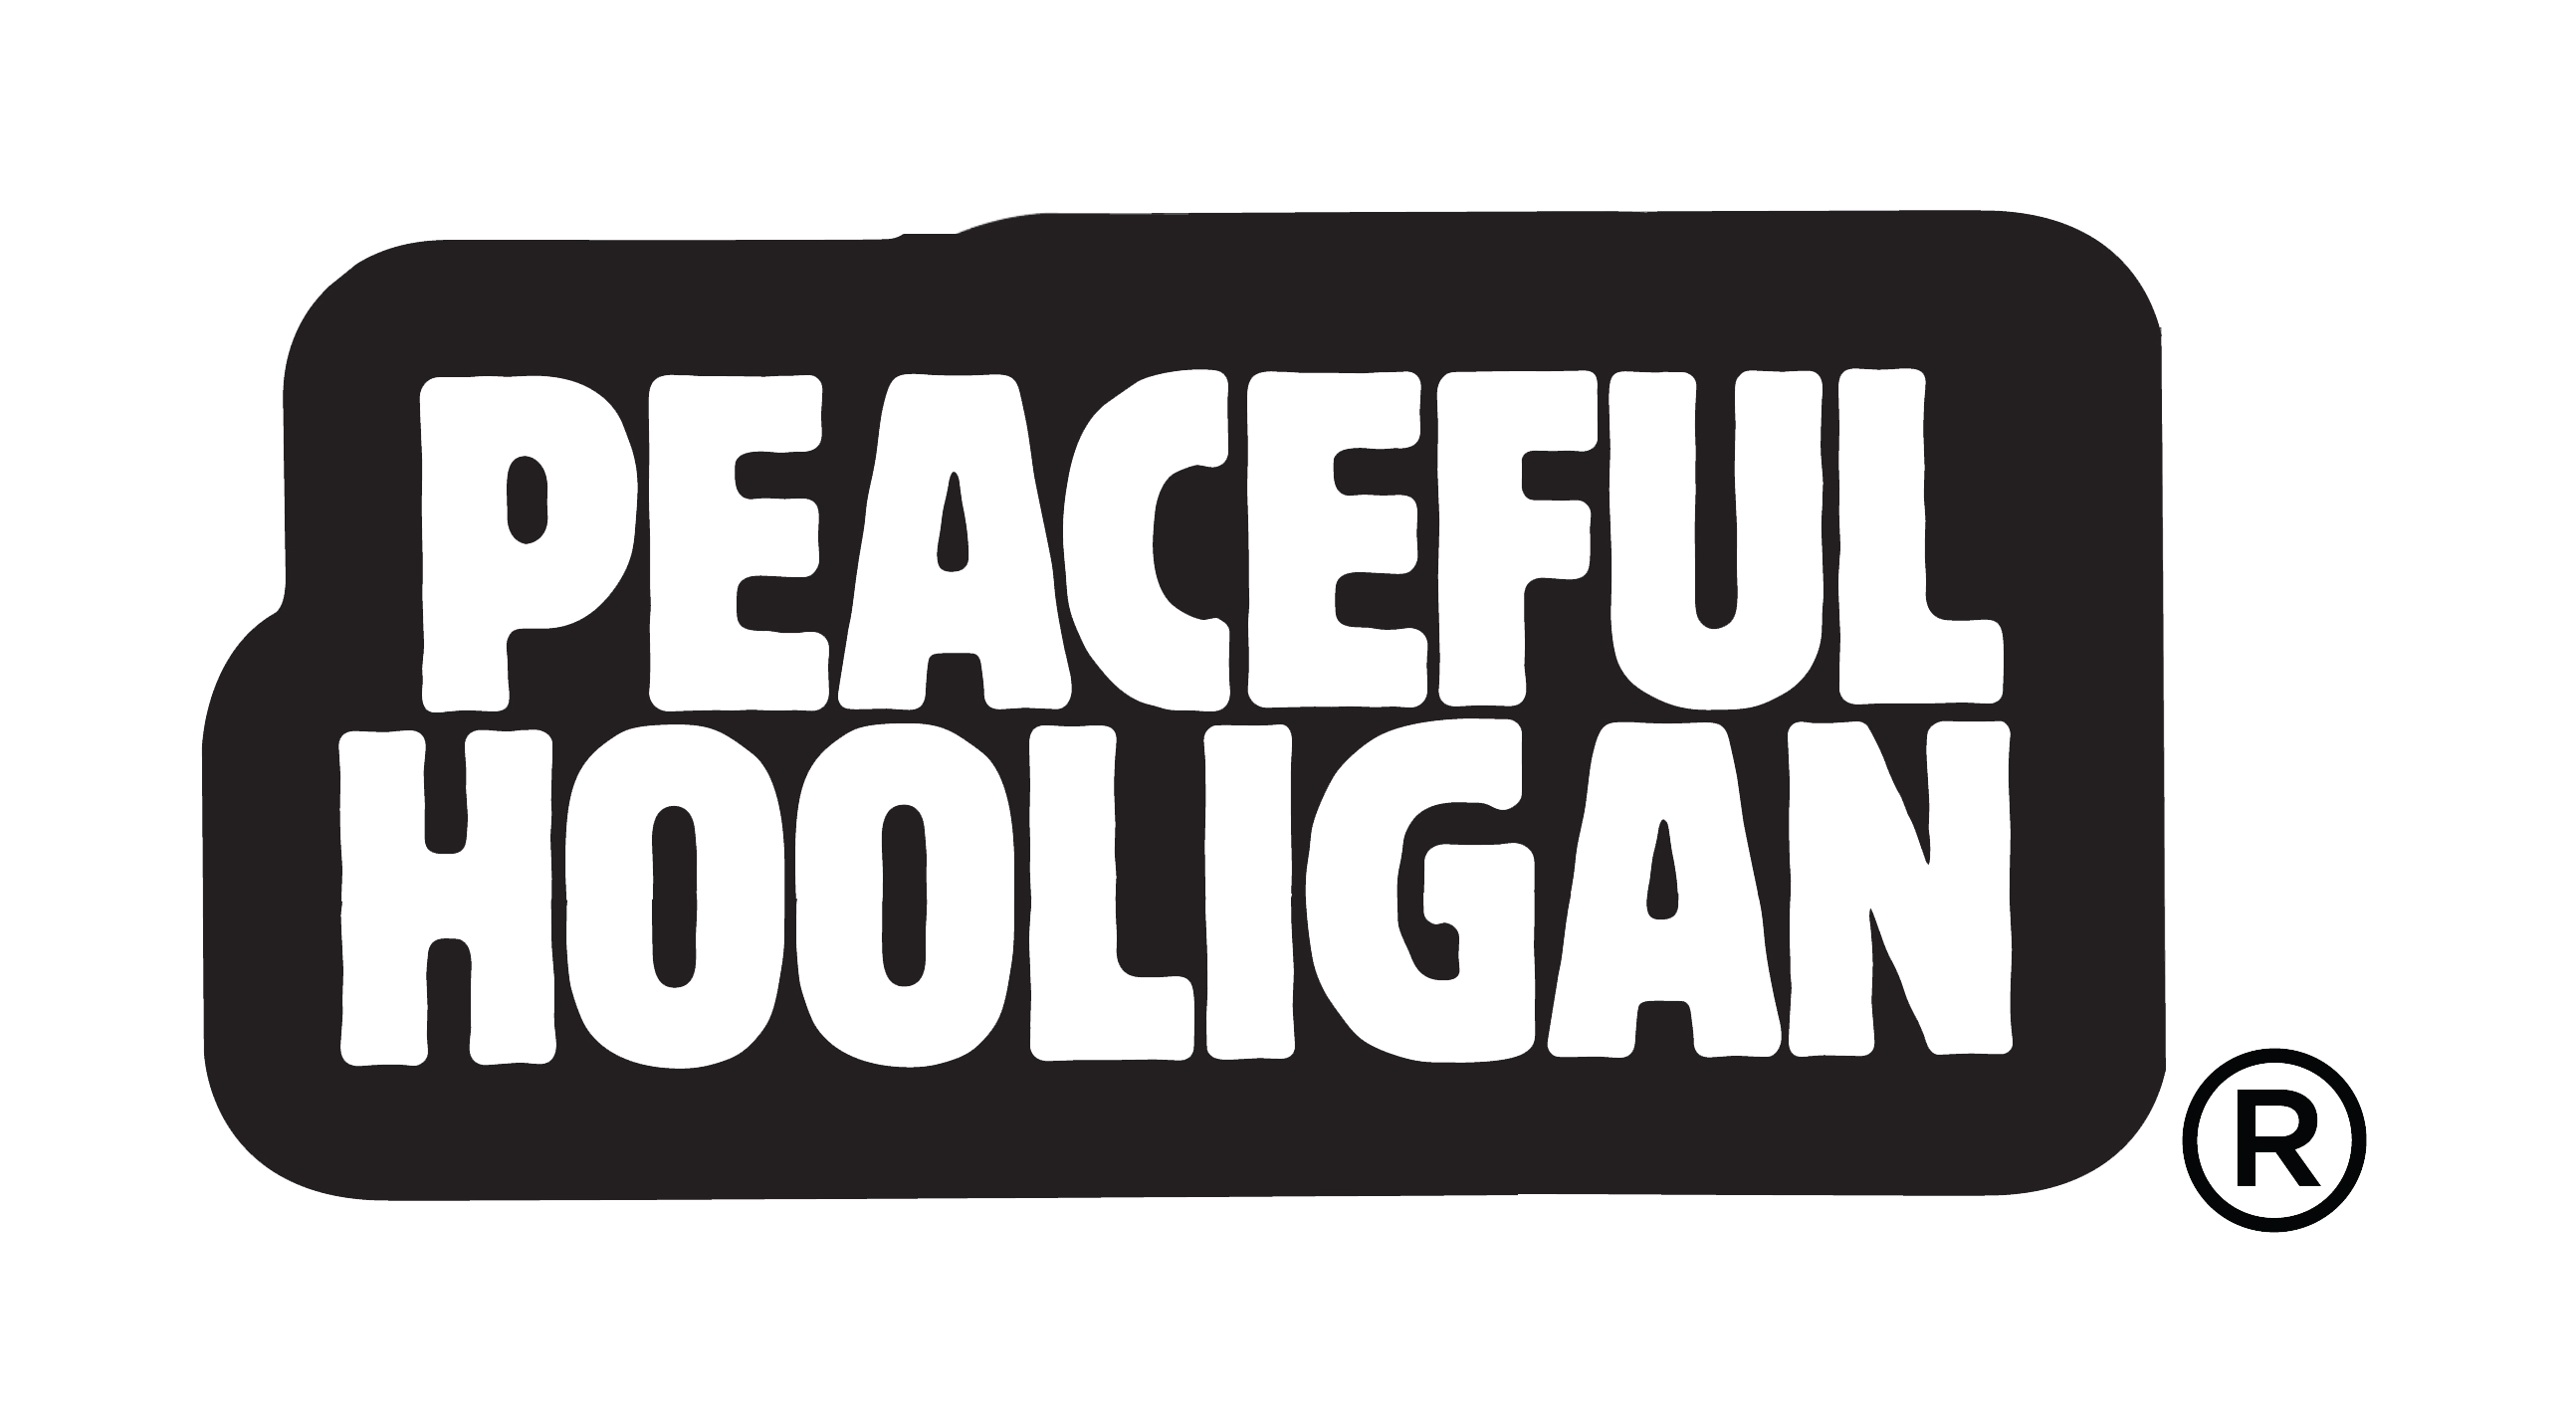 Peaceful Hooligan